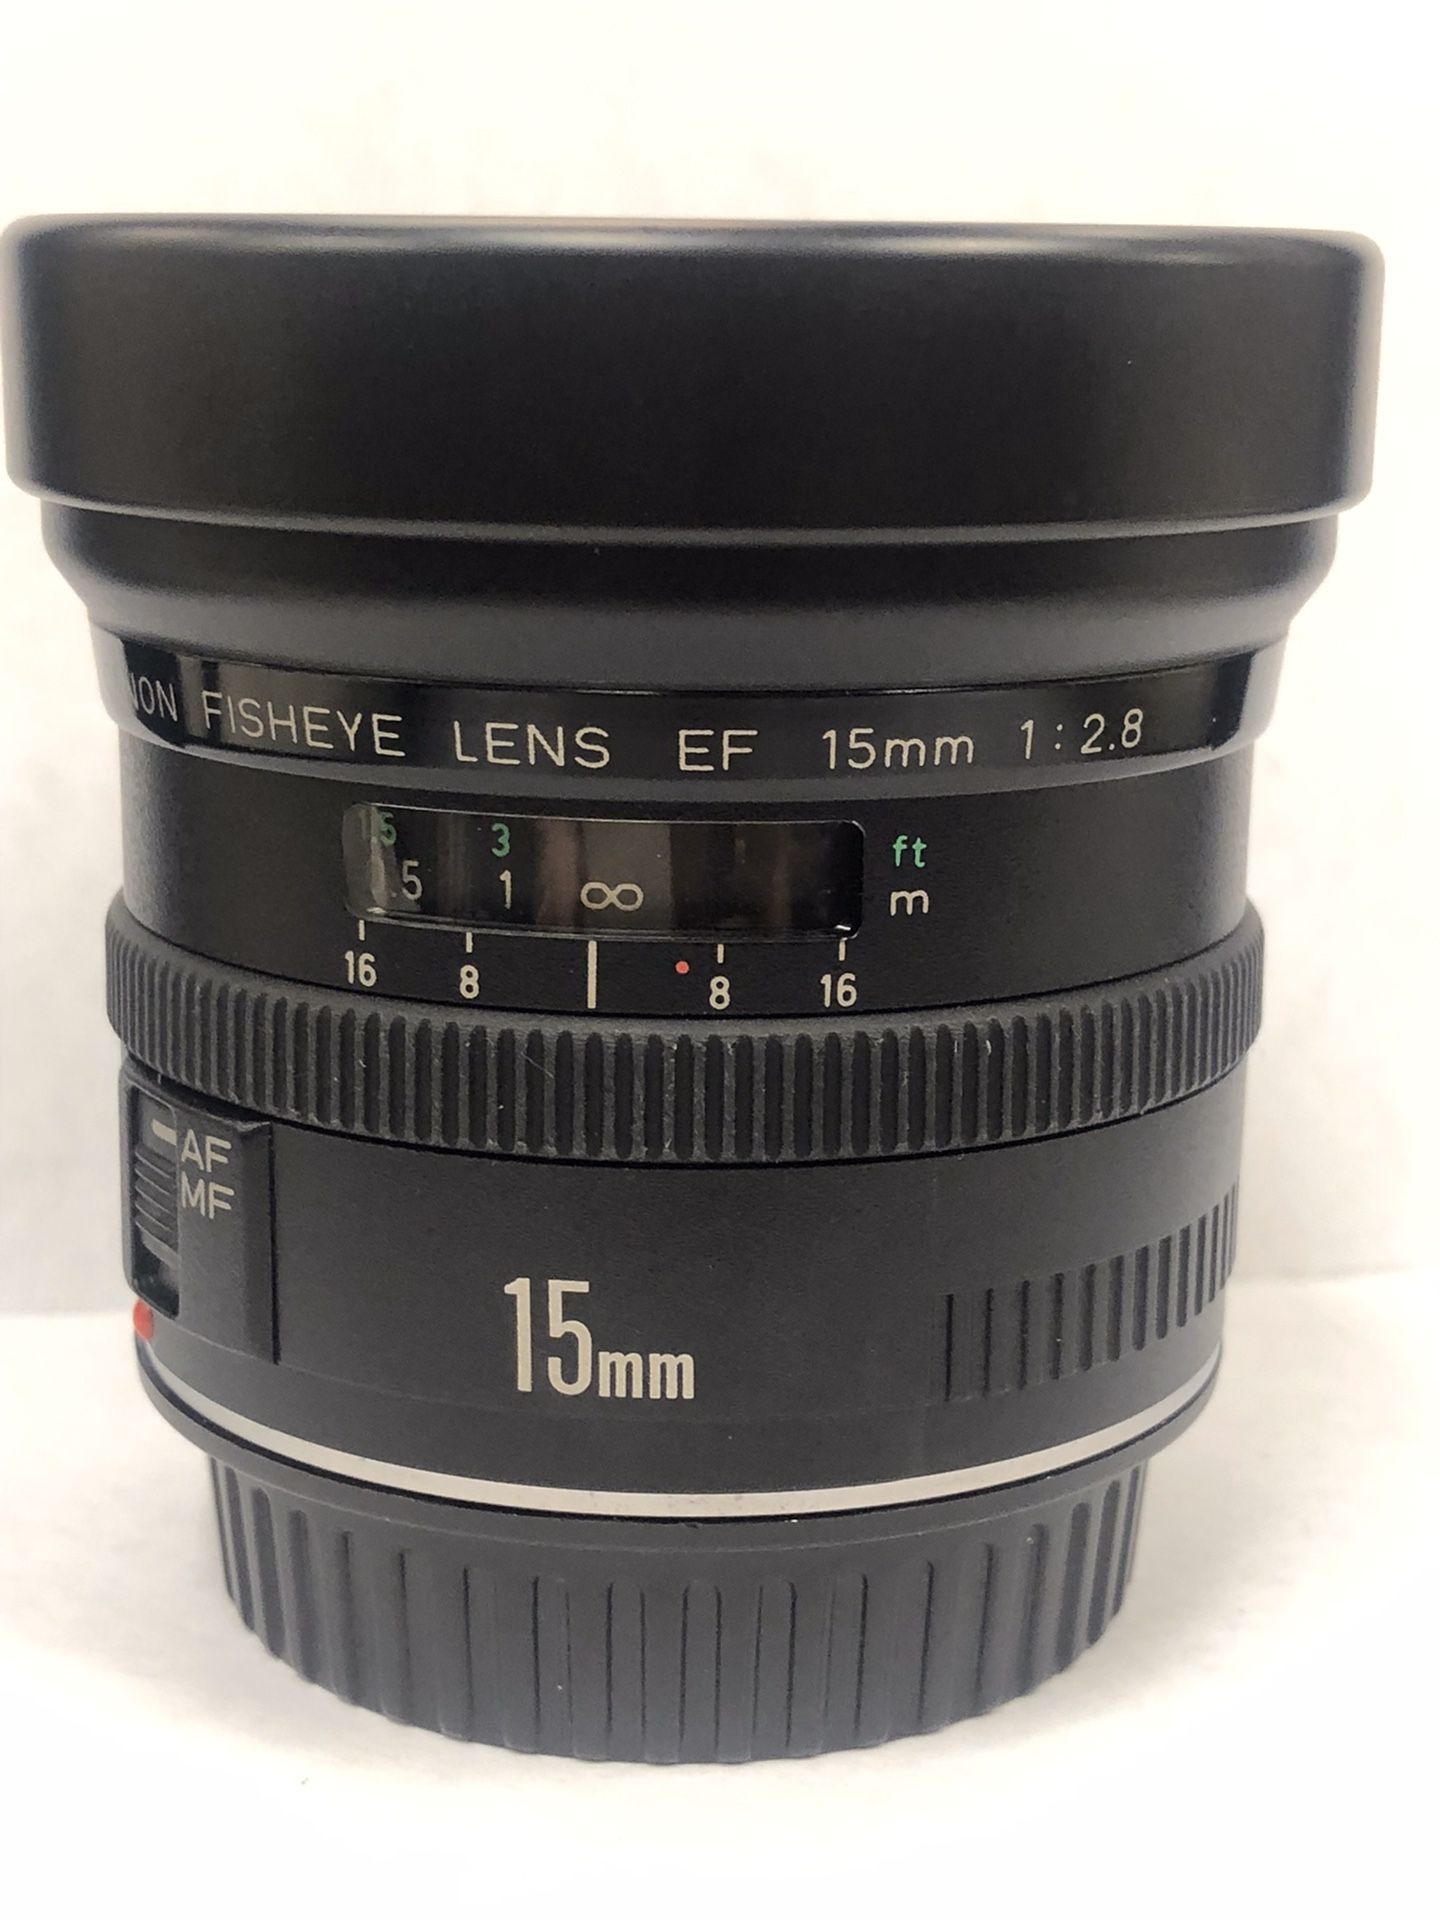 000000000Canon EF 15mm F/2.8 Fisheye Lens